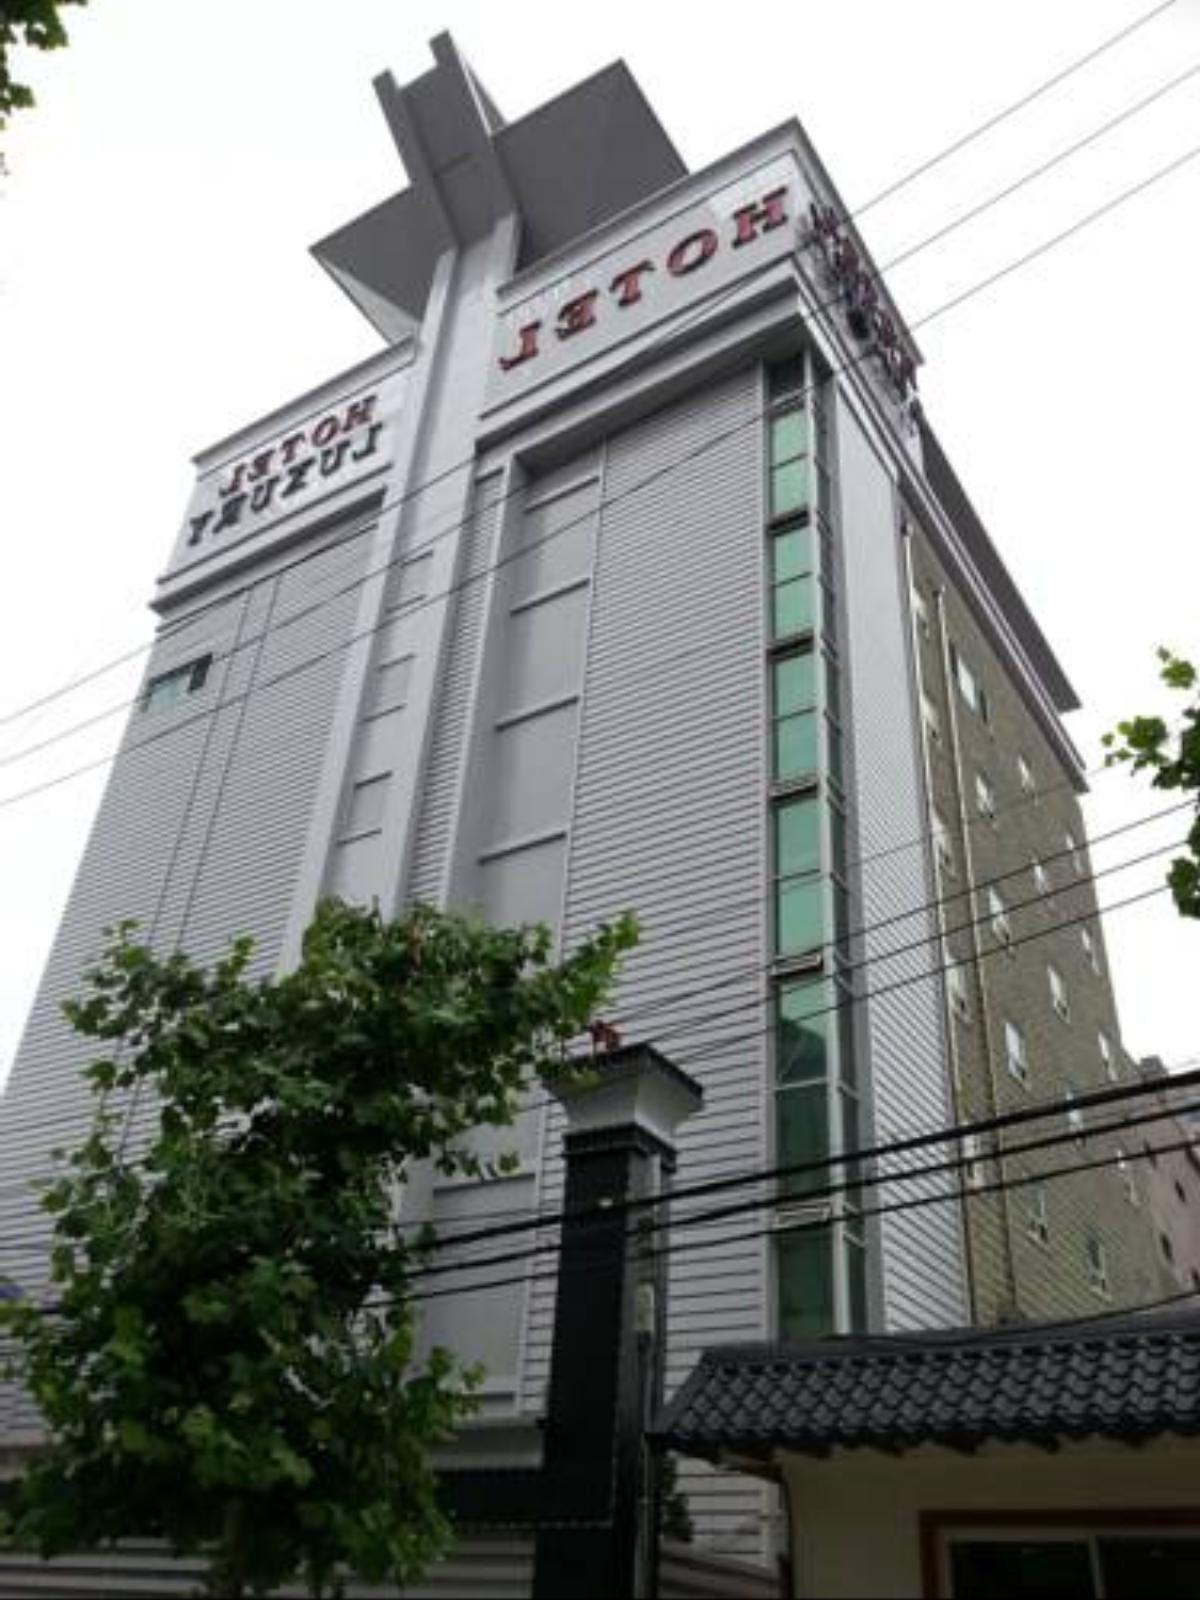 No.1 Hotel Hotel Suwon South Korea